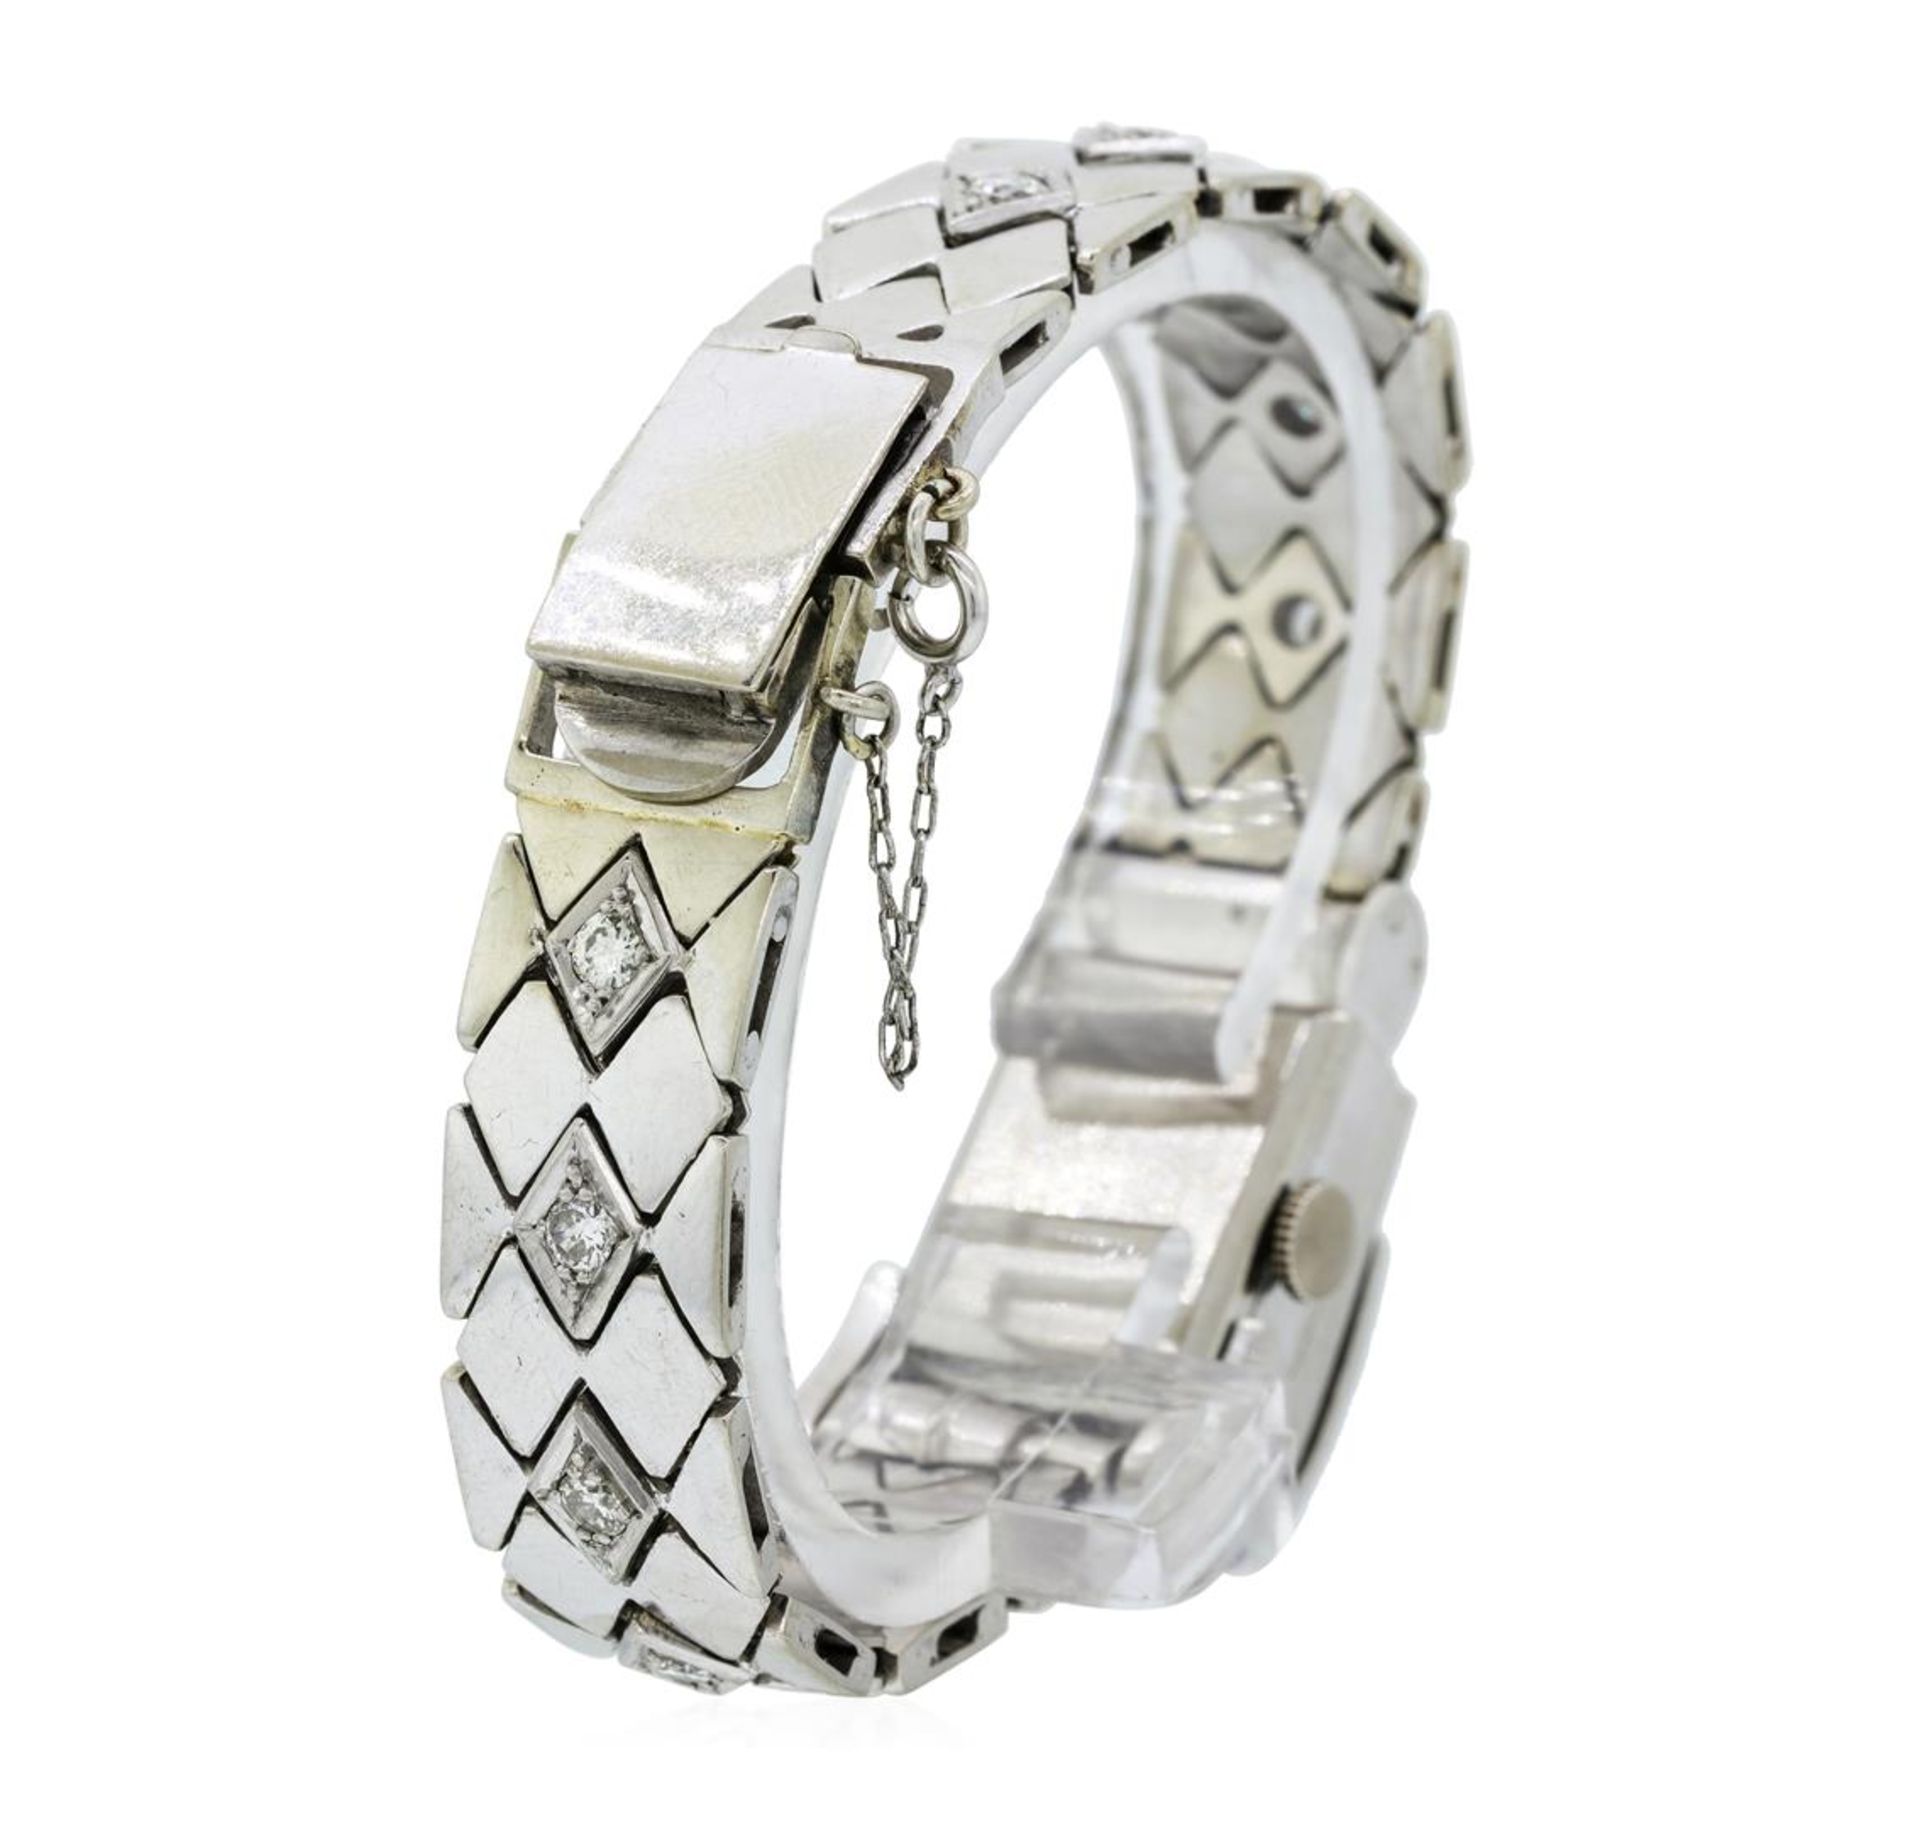 Longines Lady's Bracelet Watch - Platinum and 14KT White Gold - Image 4 of 5